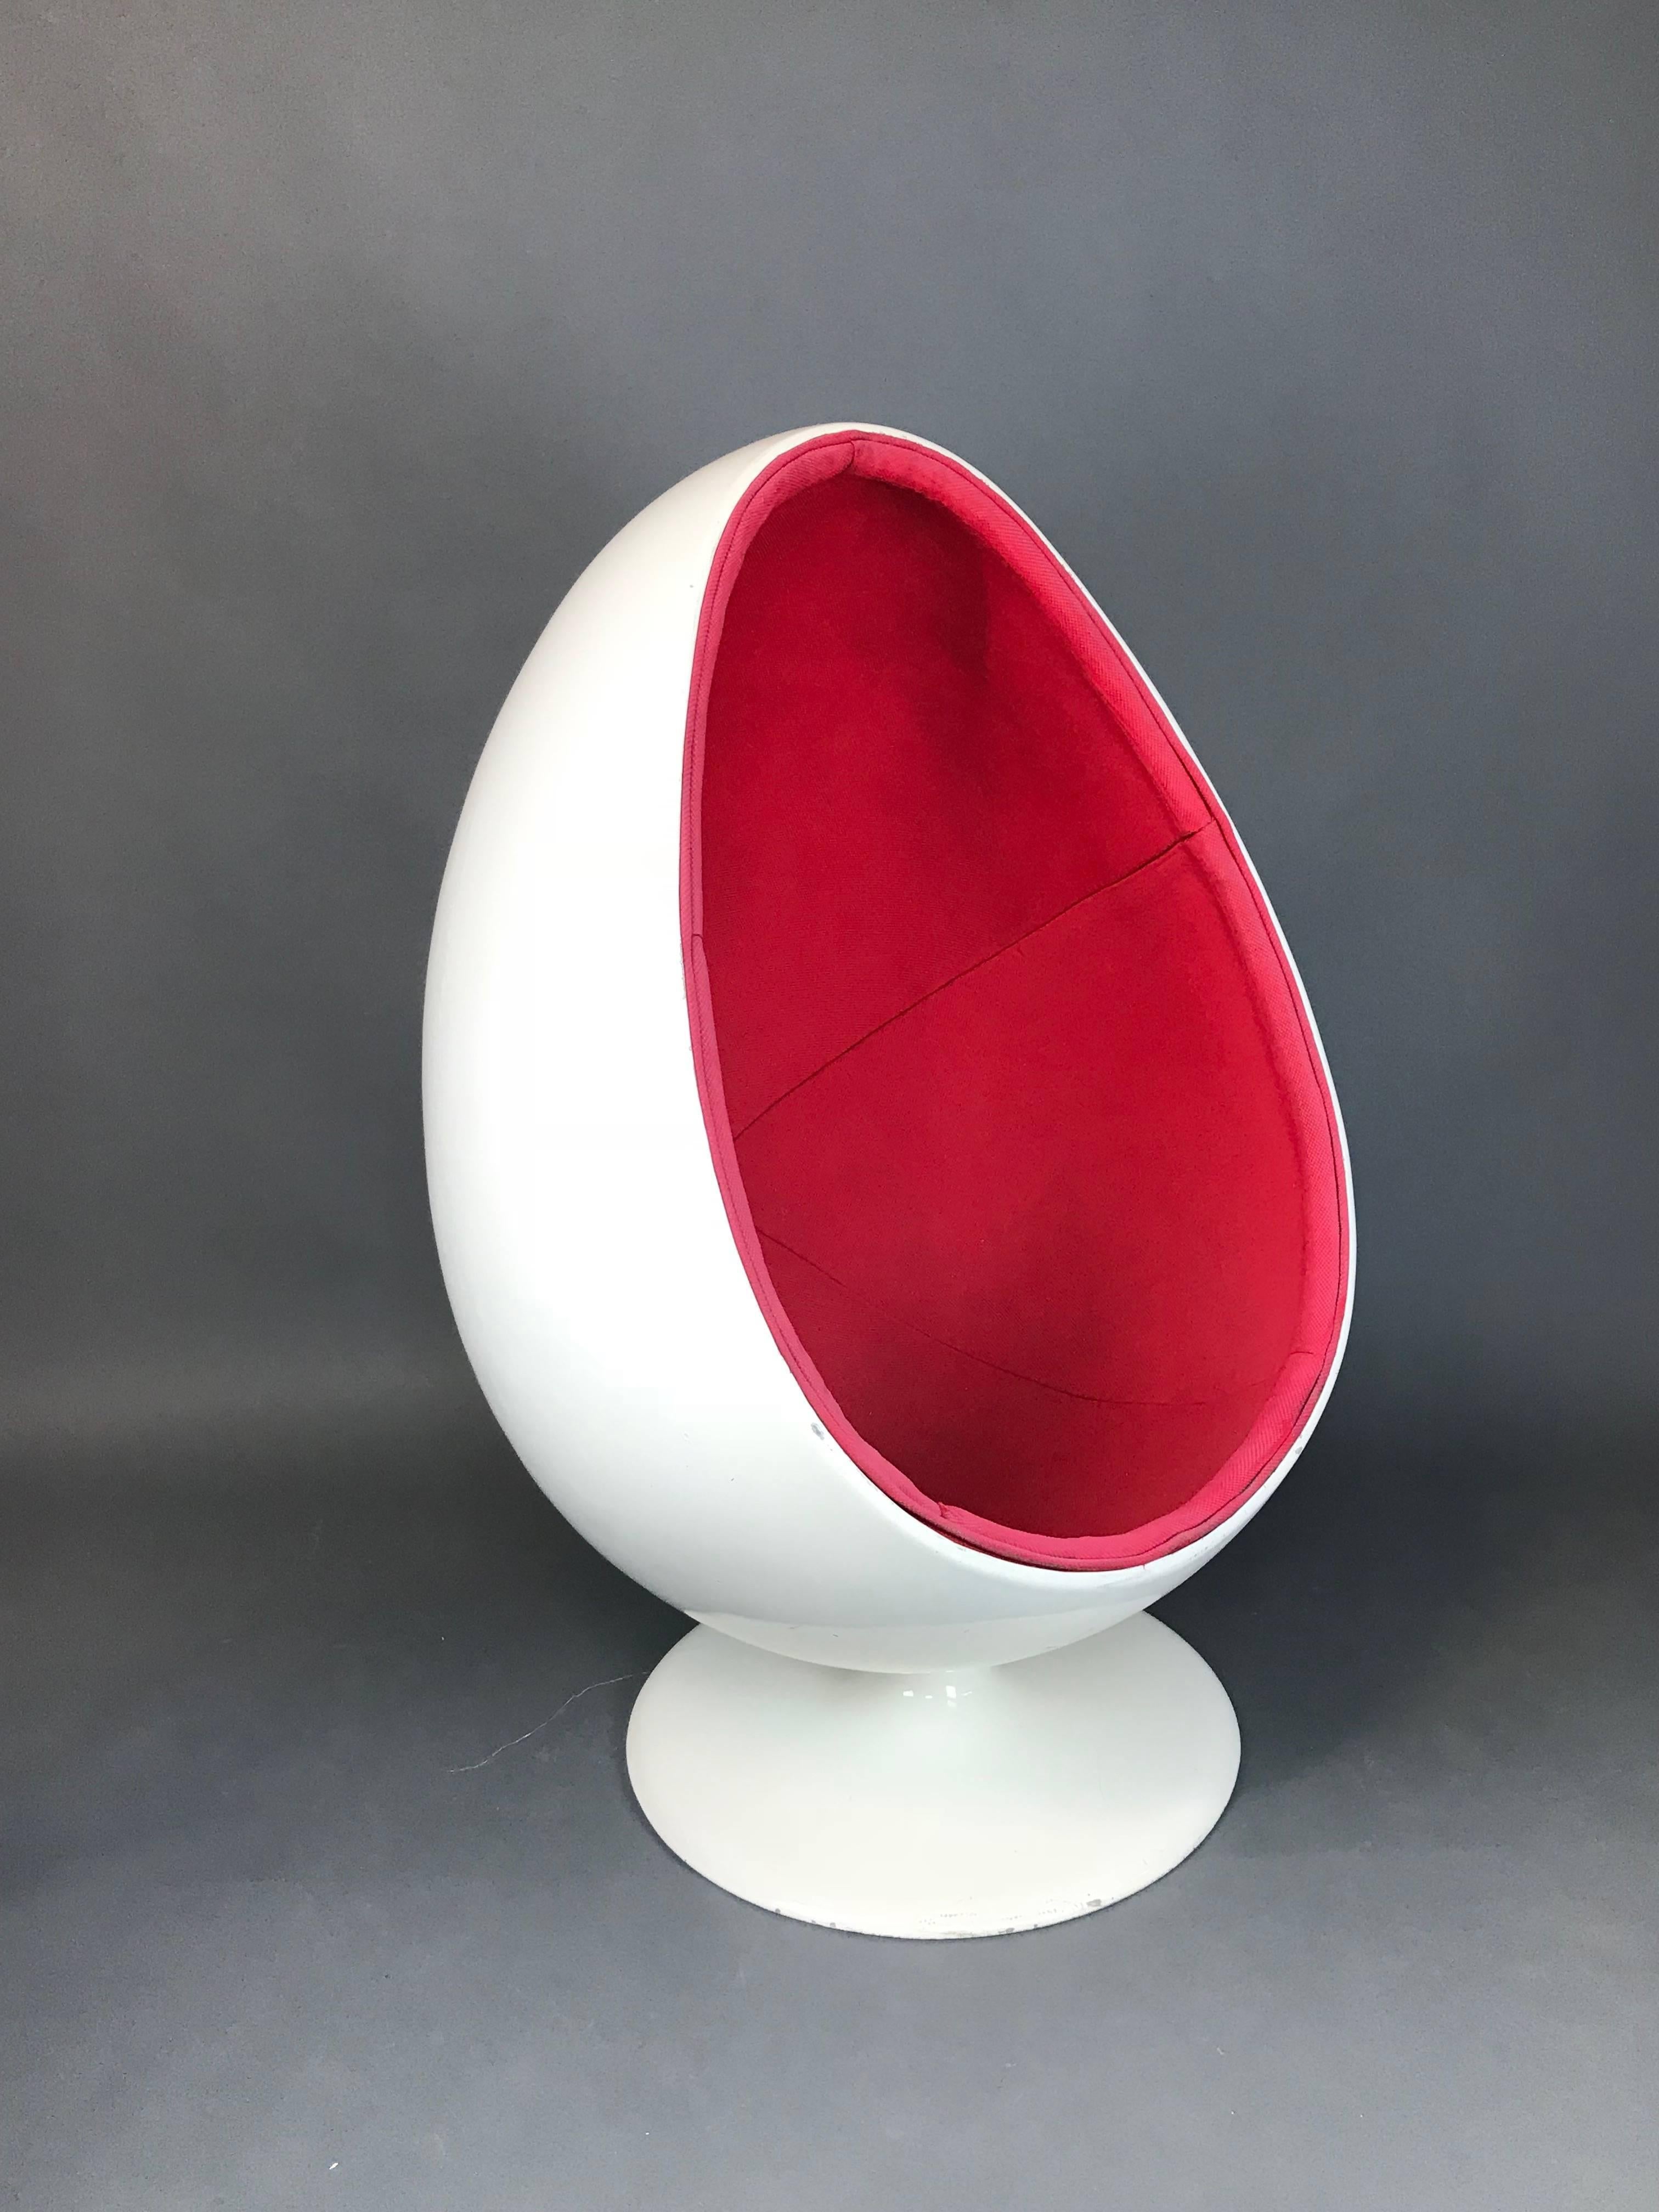 Ovalia Egg chair by Henrik Thor-Larsen.

circa 1968.
      